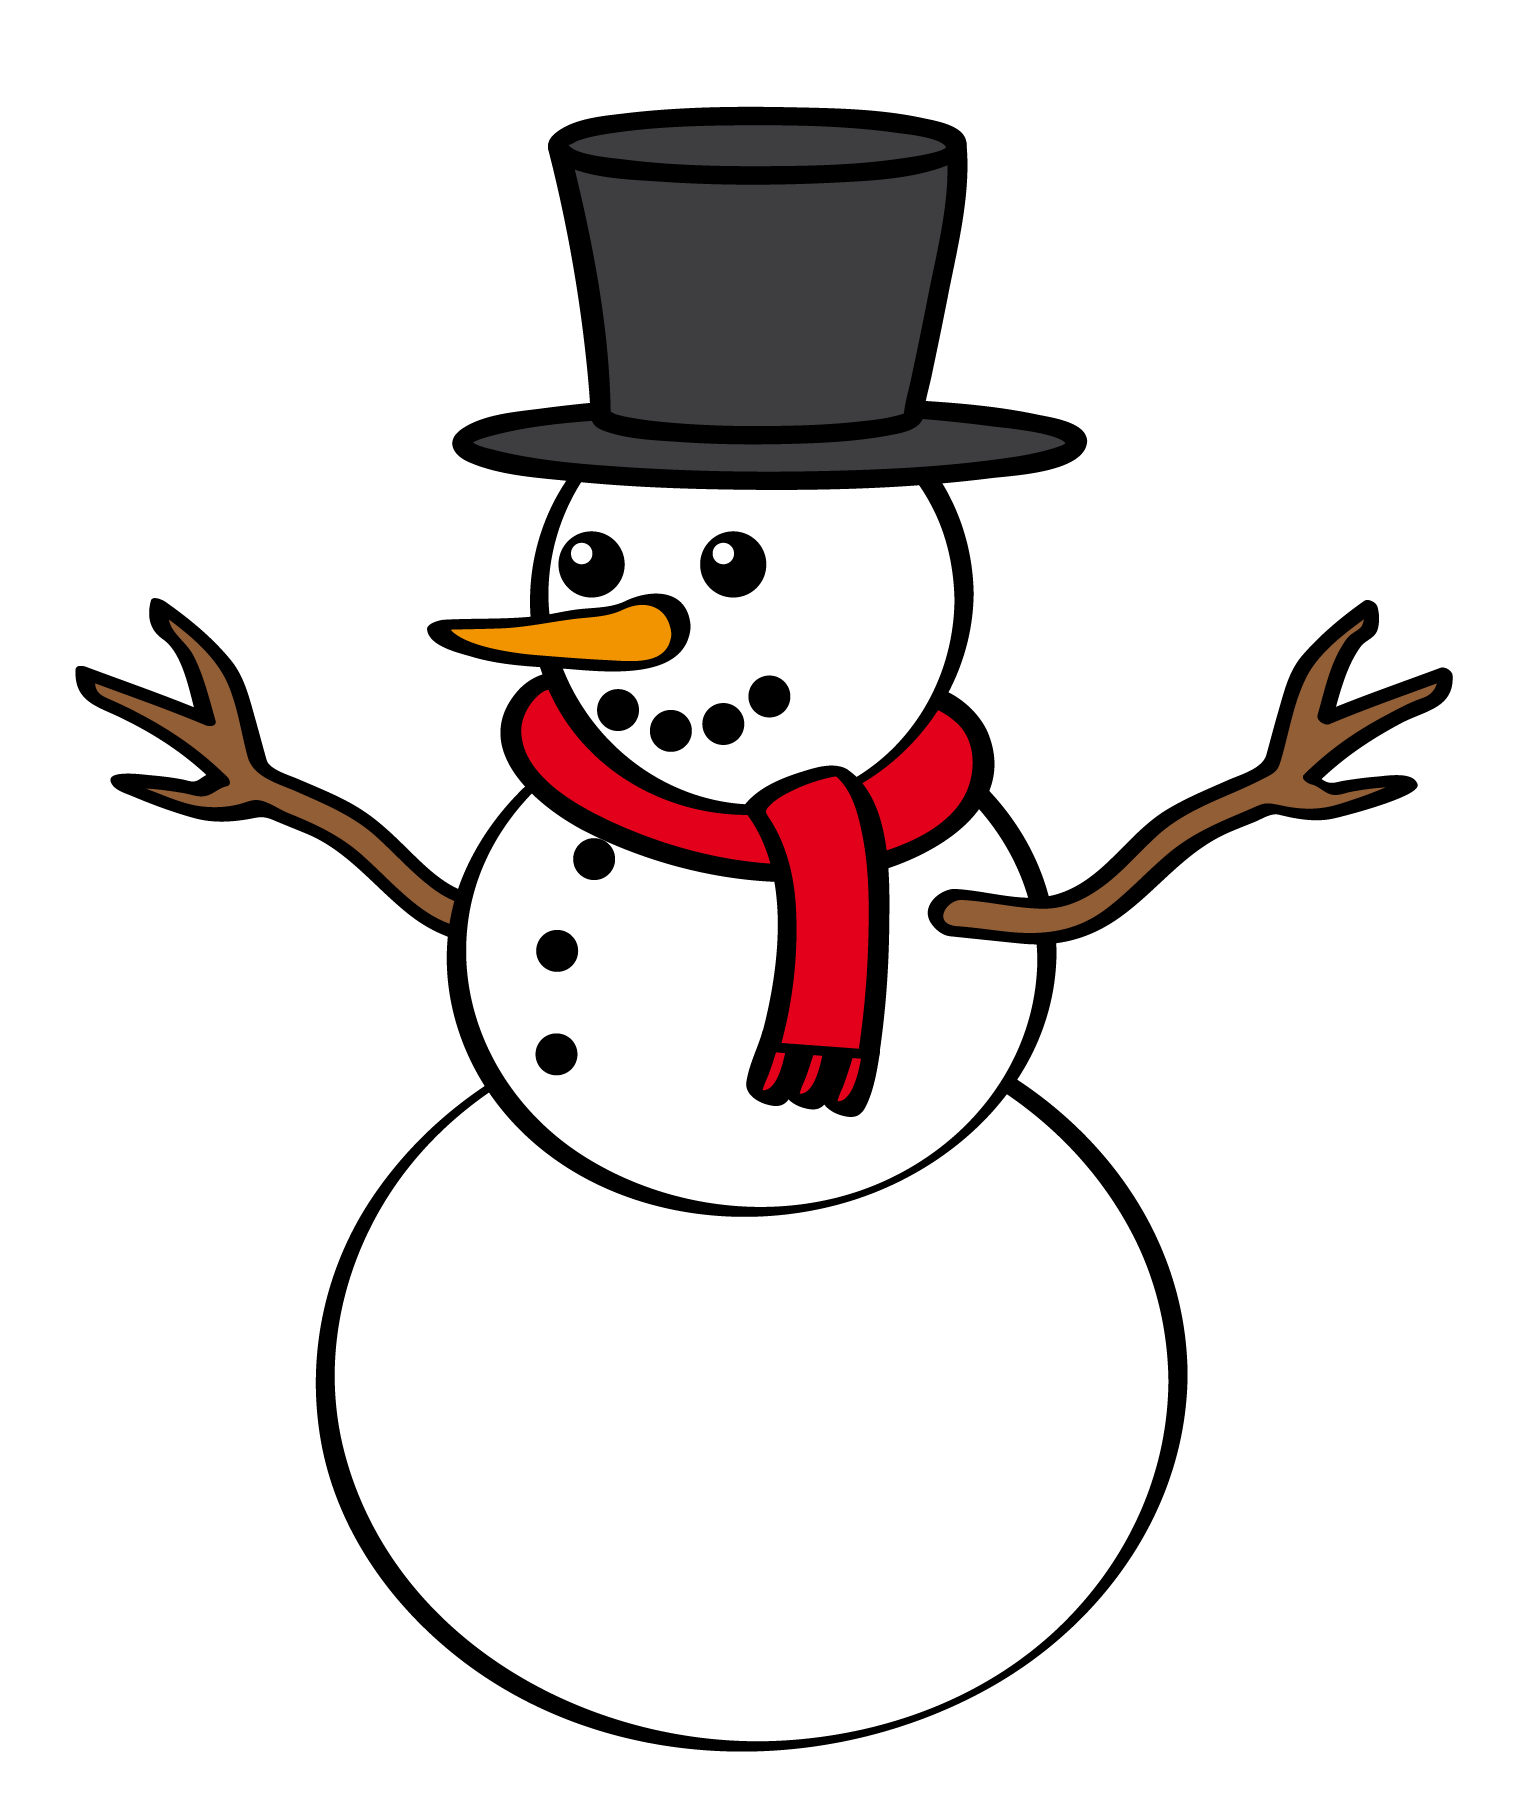 Free Cute Snowman Cliparts, Download Free Cute Snowman Cliparts png